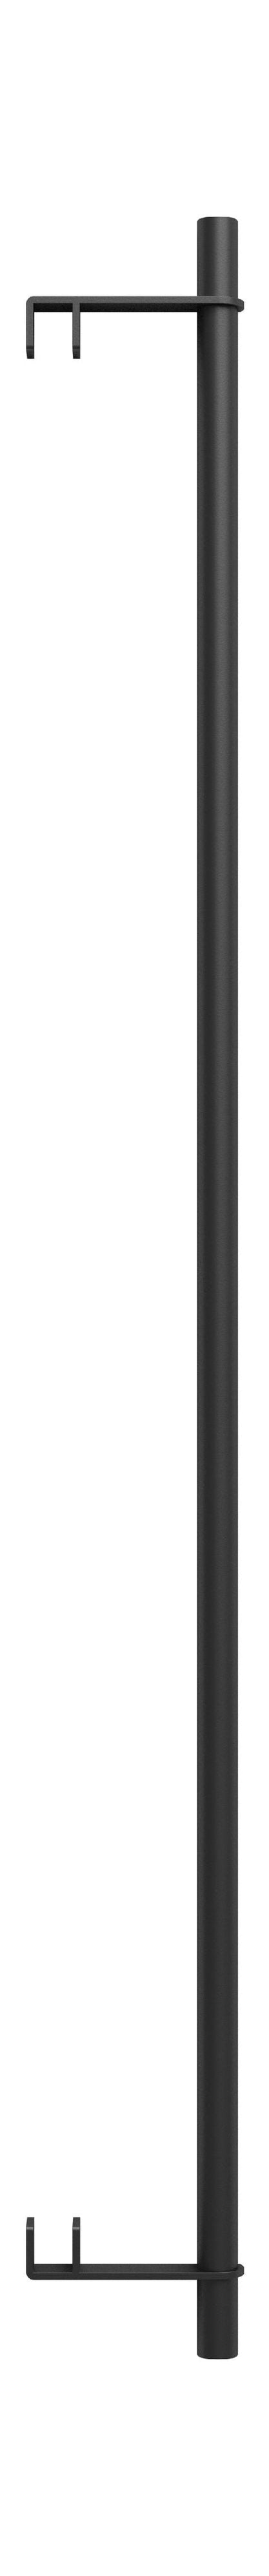 Moebe Regalsystem/Wandregalkleidung Bar 85 cm, schwarz